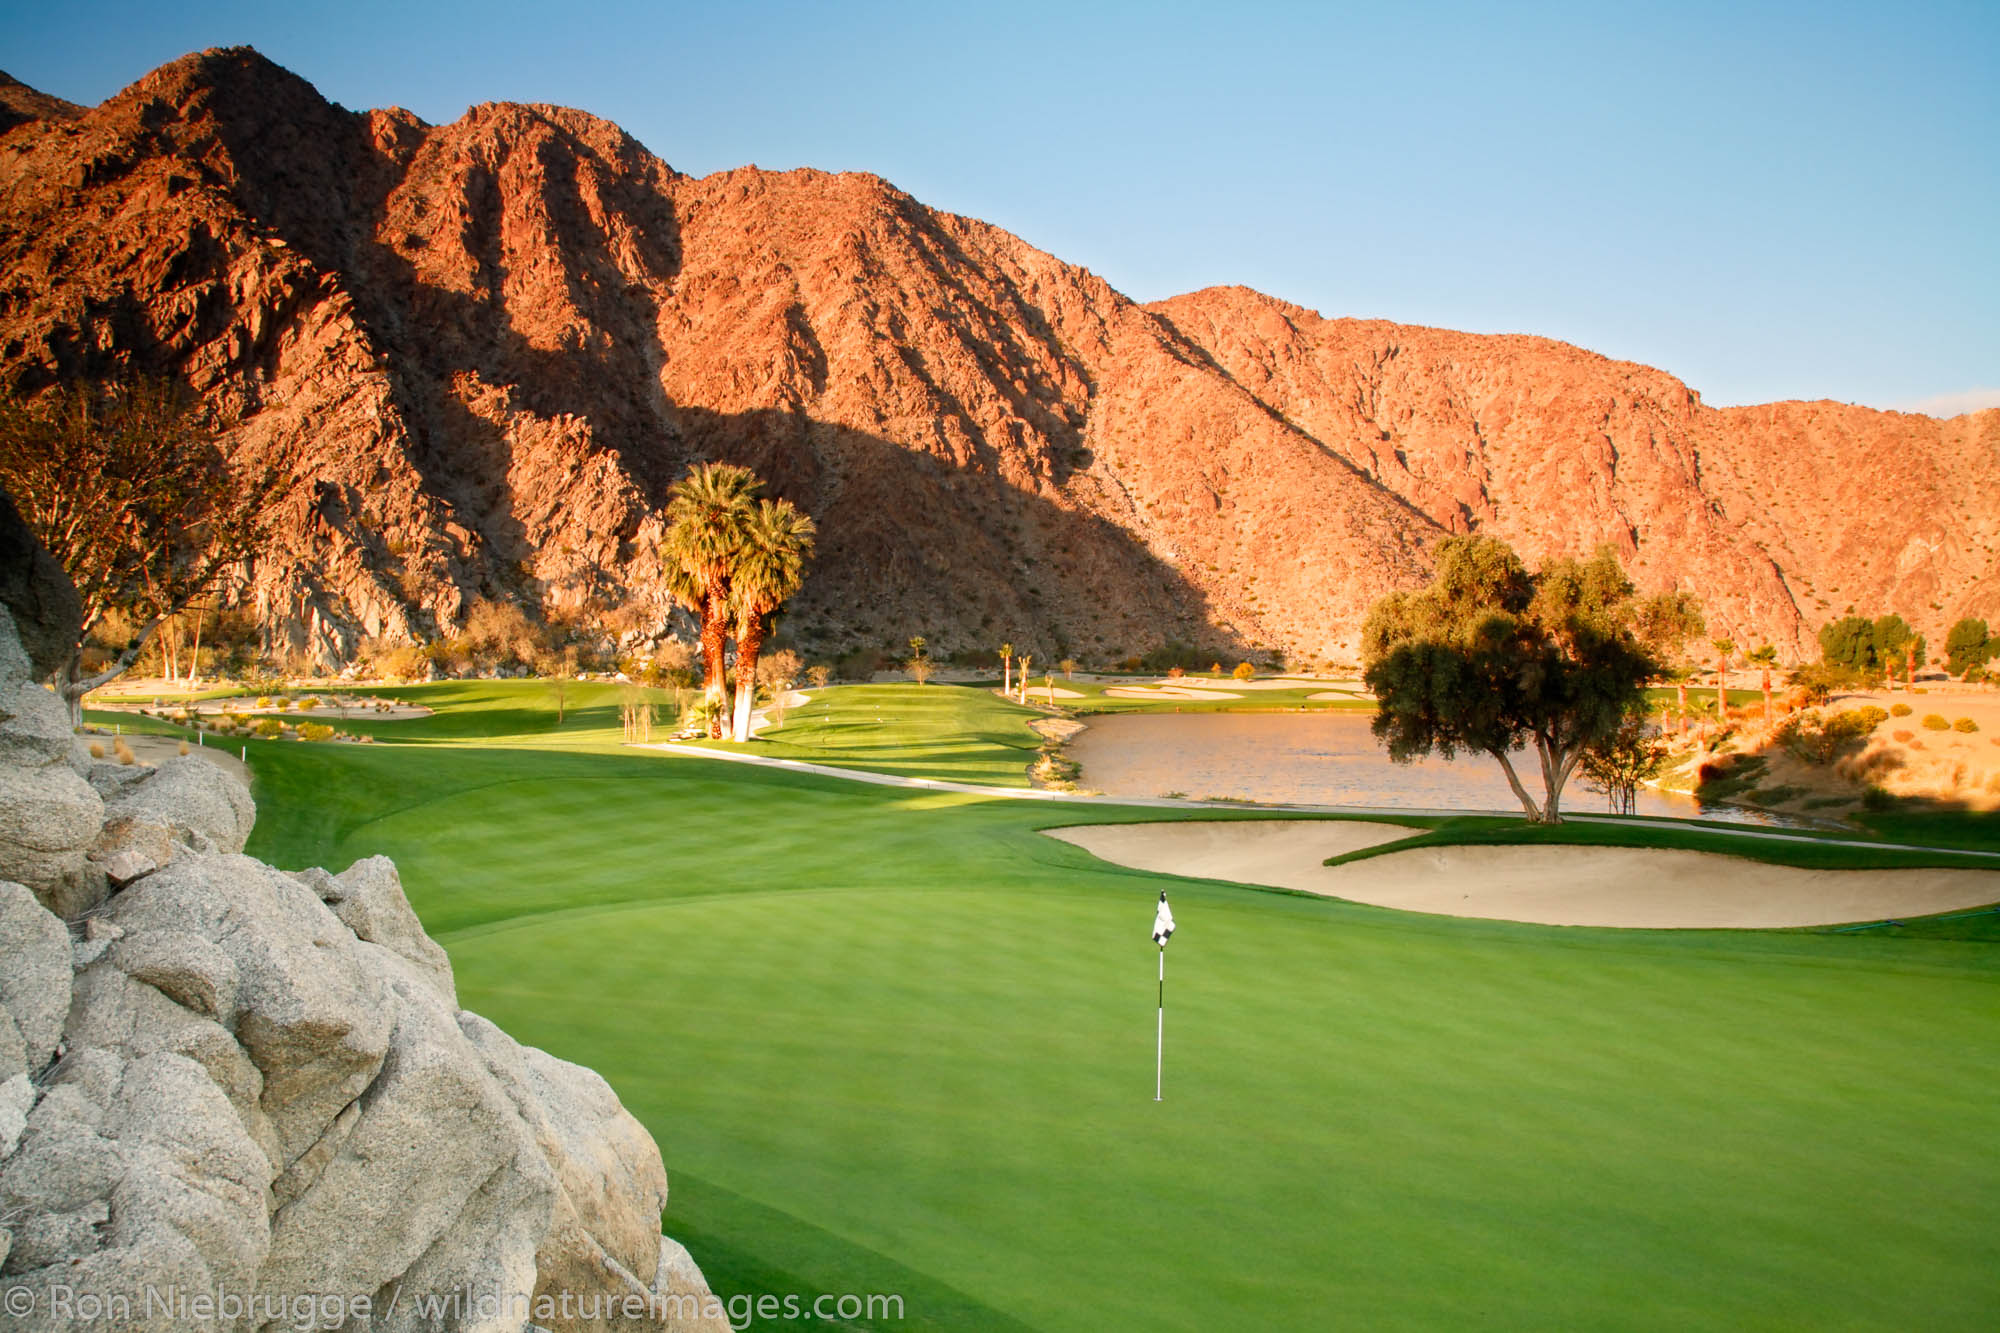 Silver Rock Resort and golf course in La Quinta near Palm Springs, California.